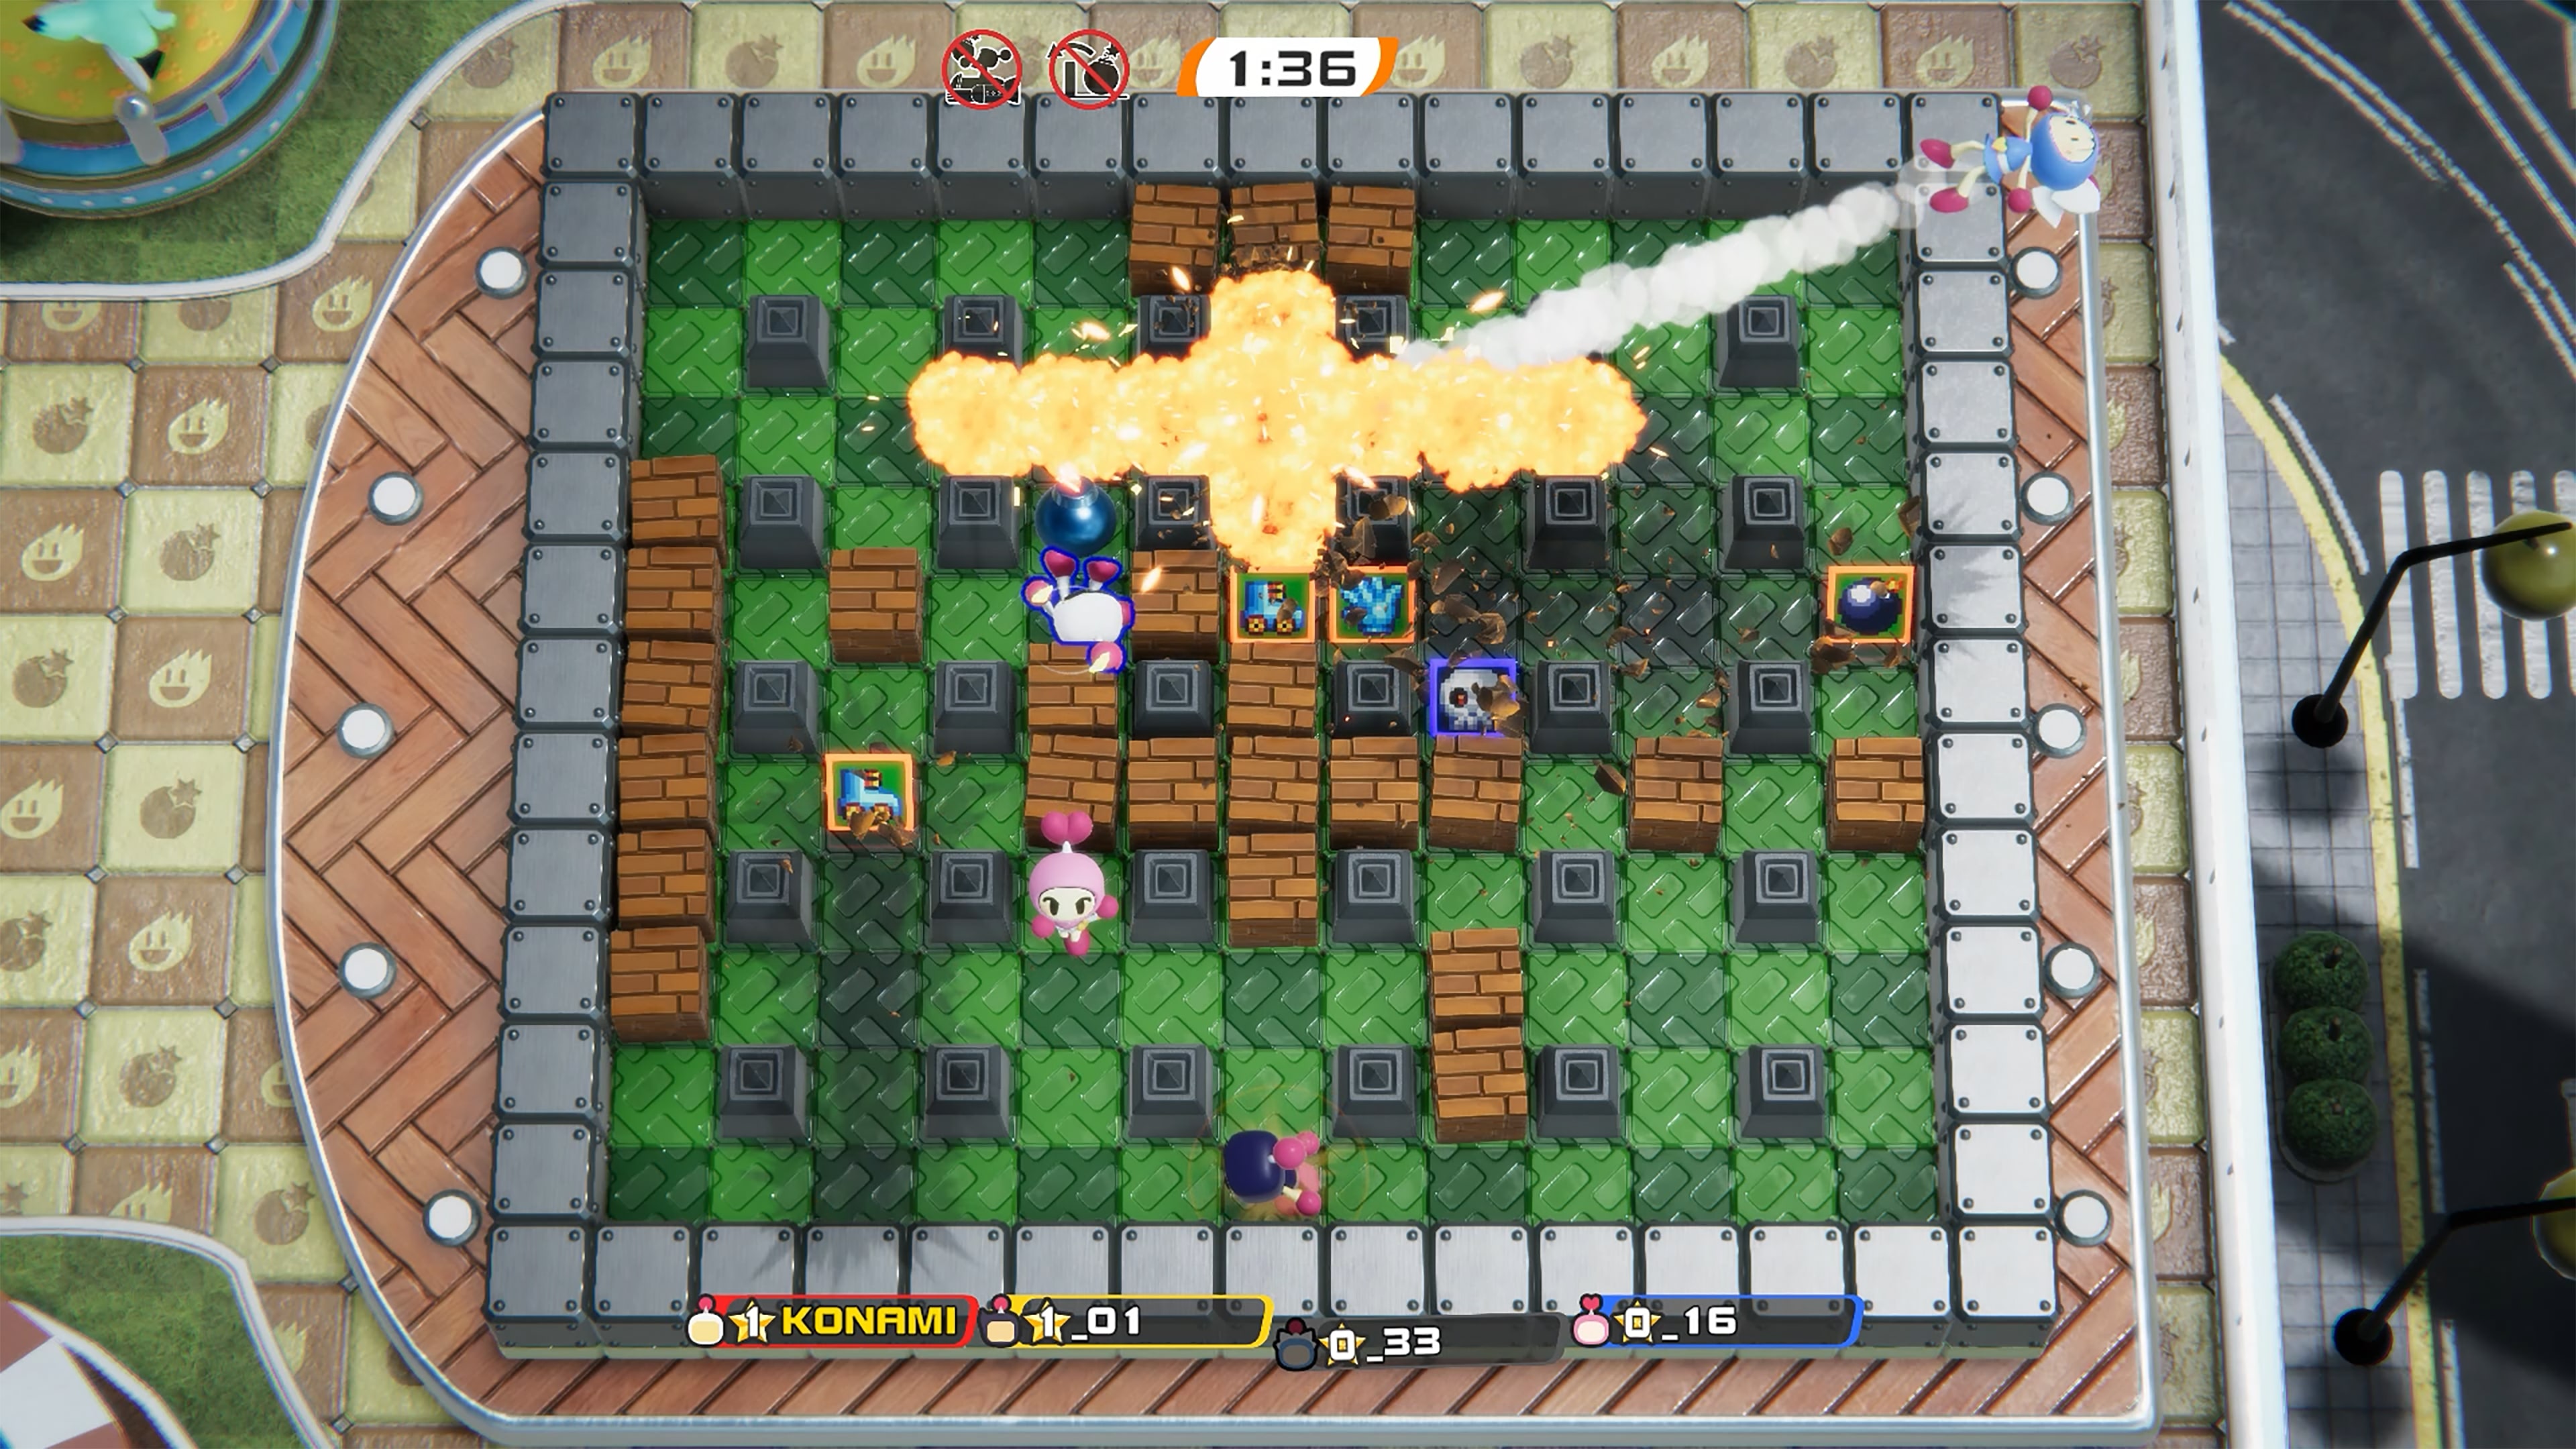 Super Bomberman R 2 for PlayStation 4 - Download